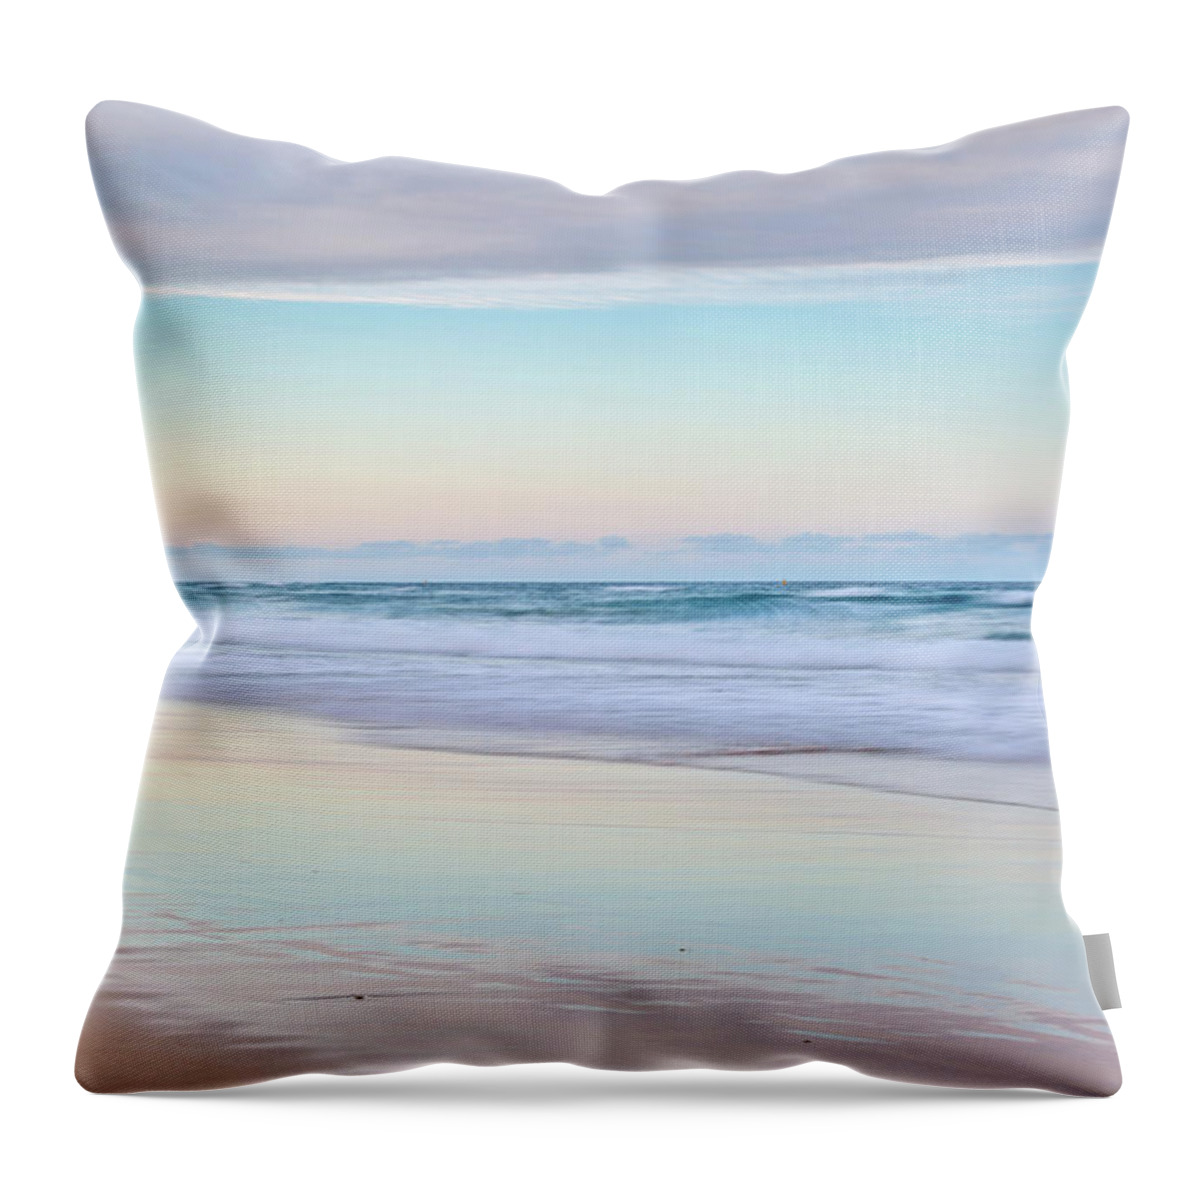 Australia Throw Pillow featuring the photograph Pastel Reflections by Az Jackson